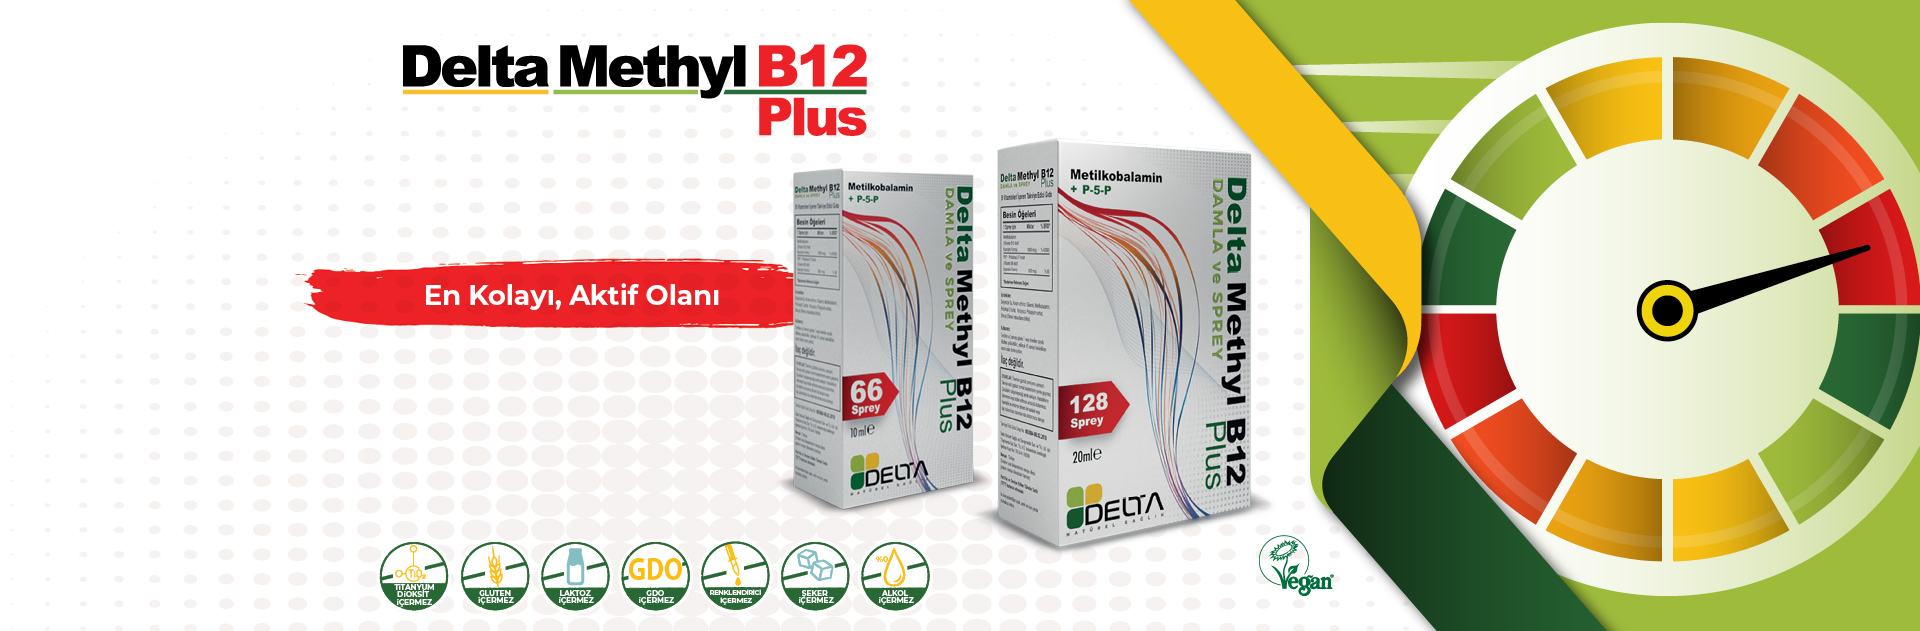 b12 mthyl doğal vegan vitamin